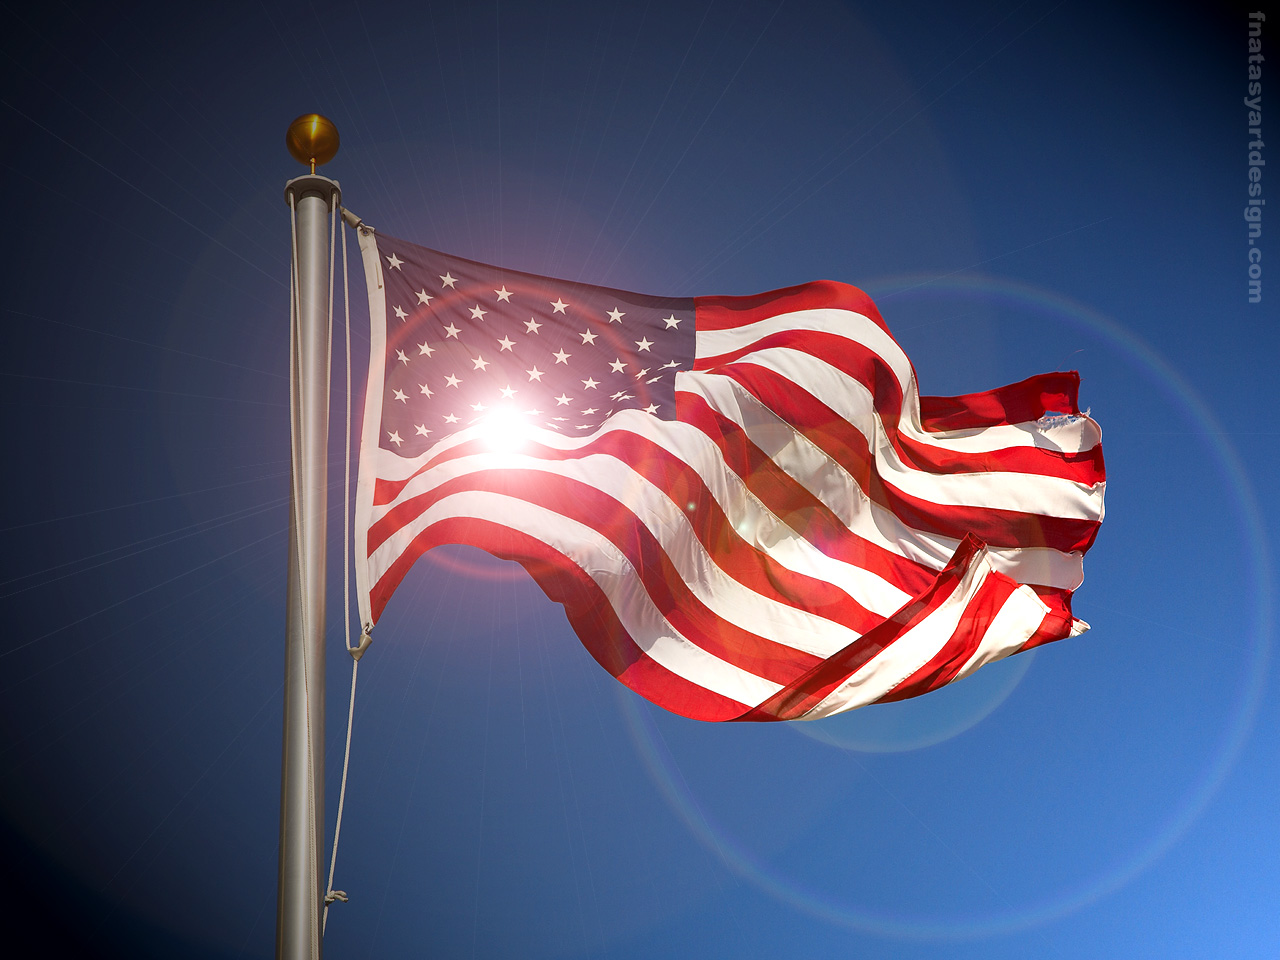 American flag desktop sunrise 1280 x 960pix wallpaper Abstract Photo